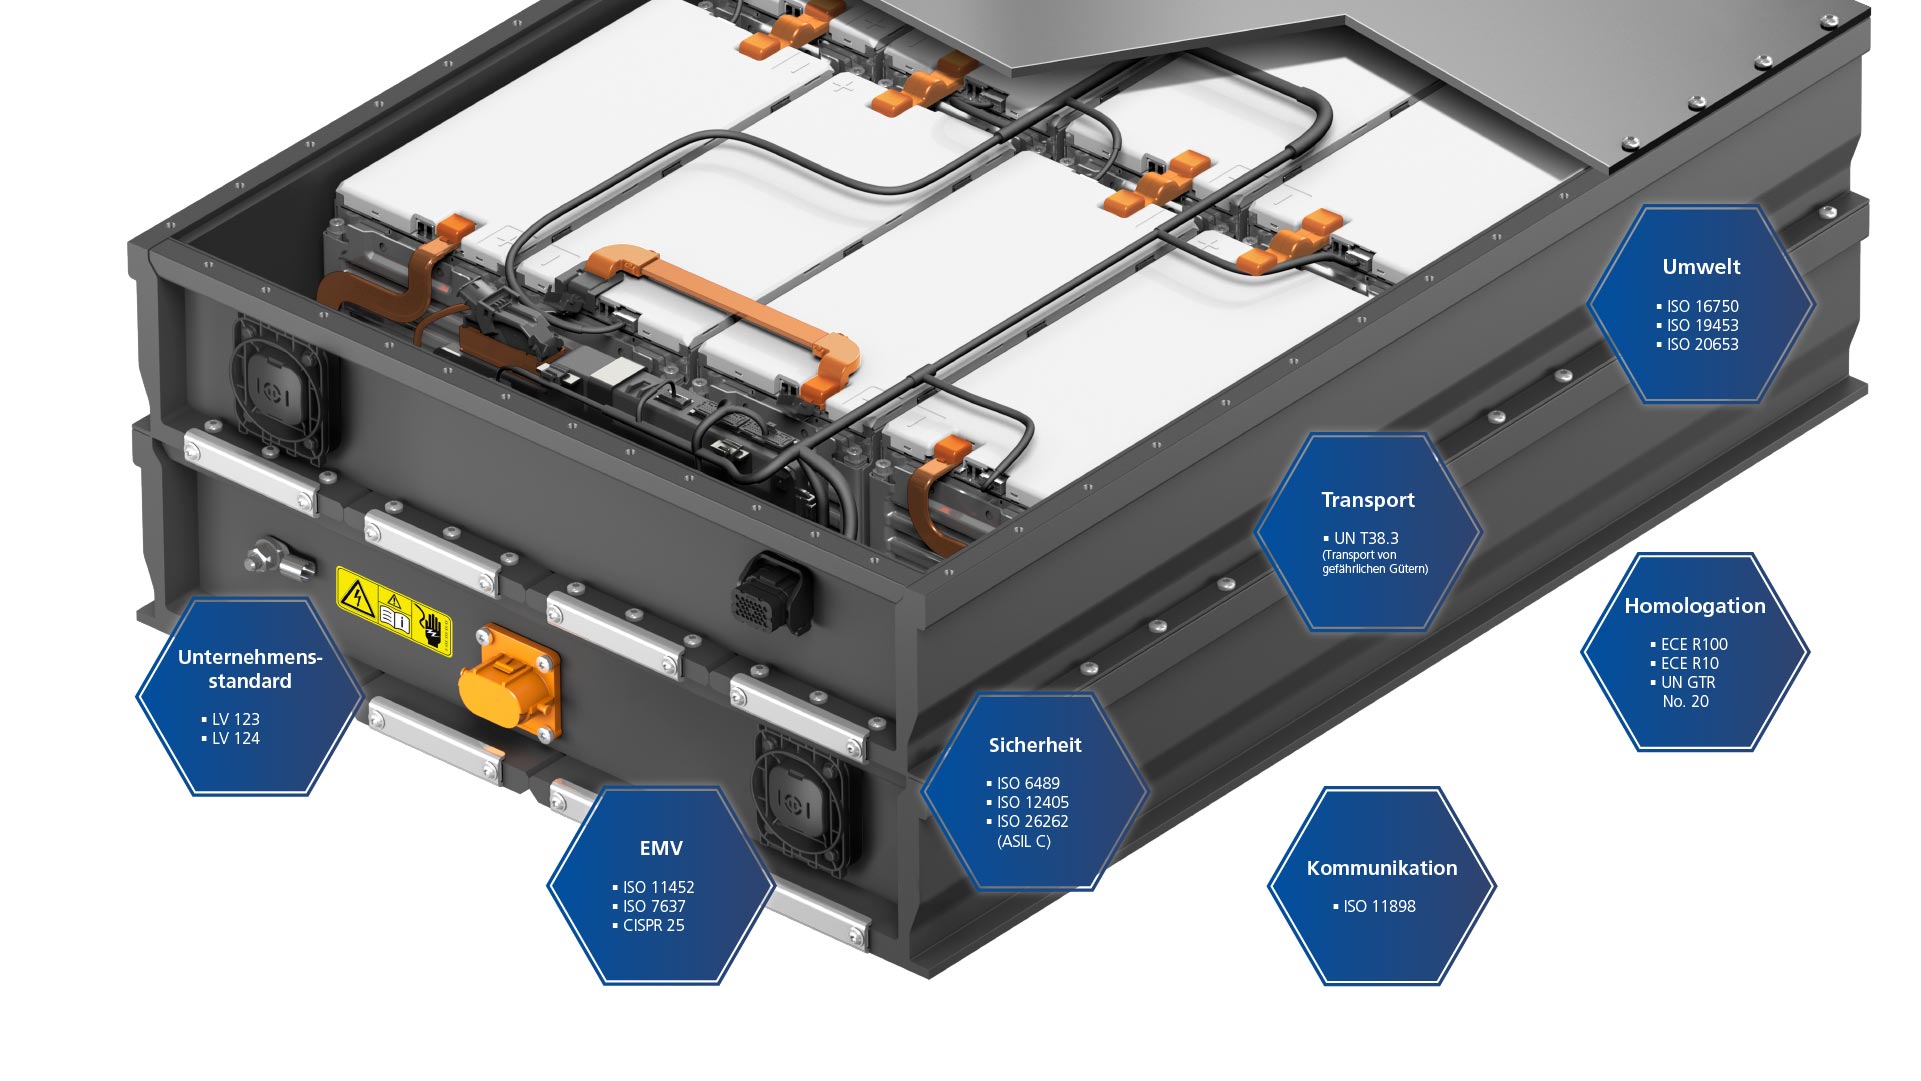 Webasto Batterieloesungen Standardbatteriesysteme Infografik technische Details